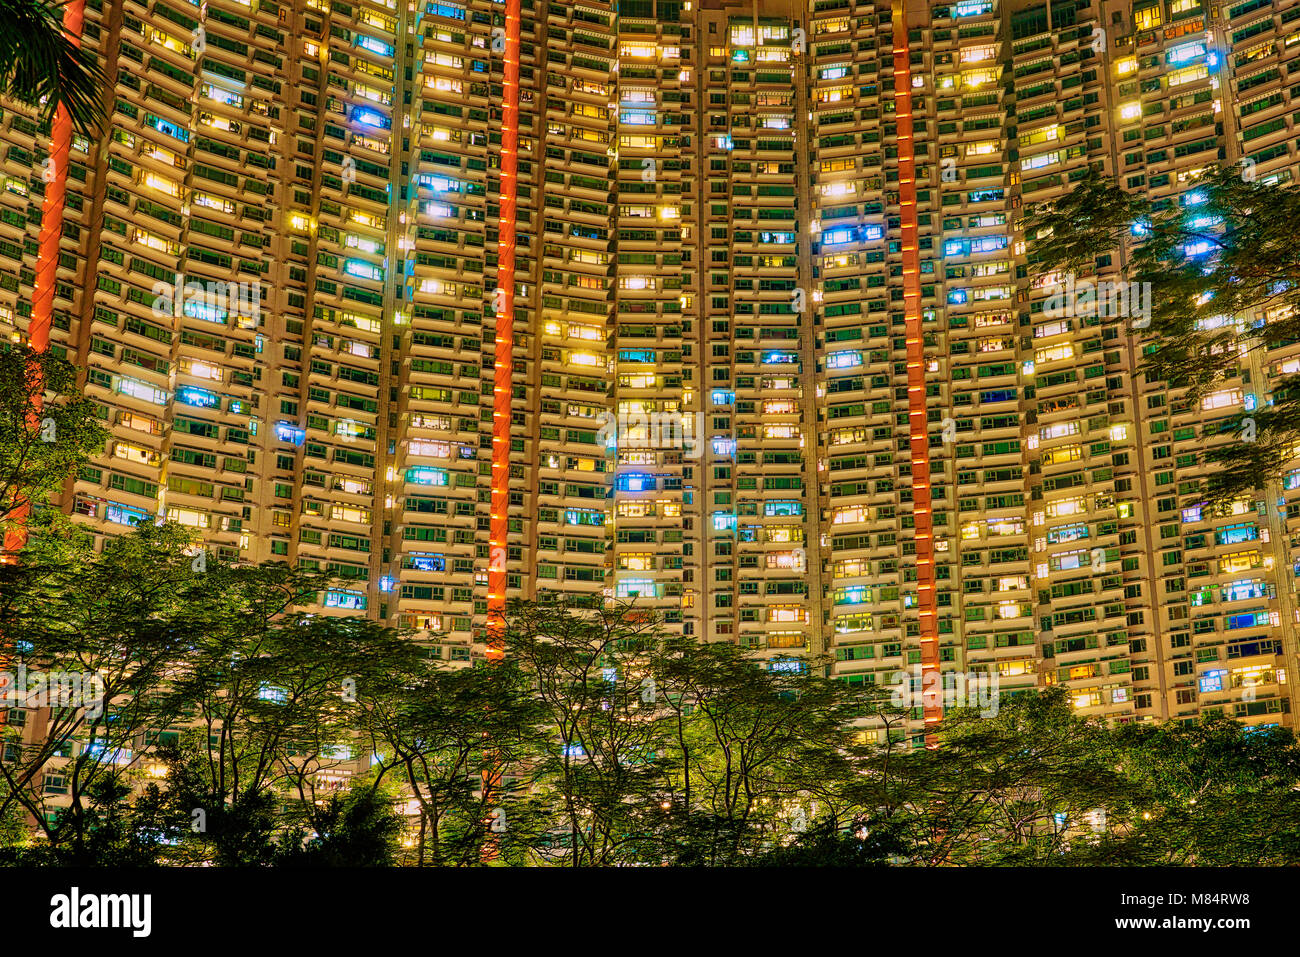 Hochhäuser in Hongkong nach Sonnenuntergang w Leuchten in den Appartments Stockfoto